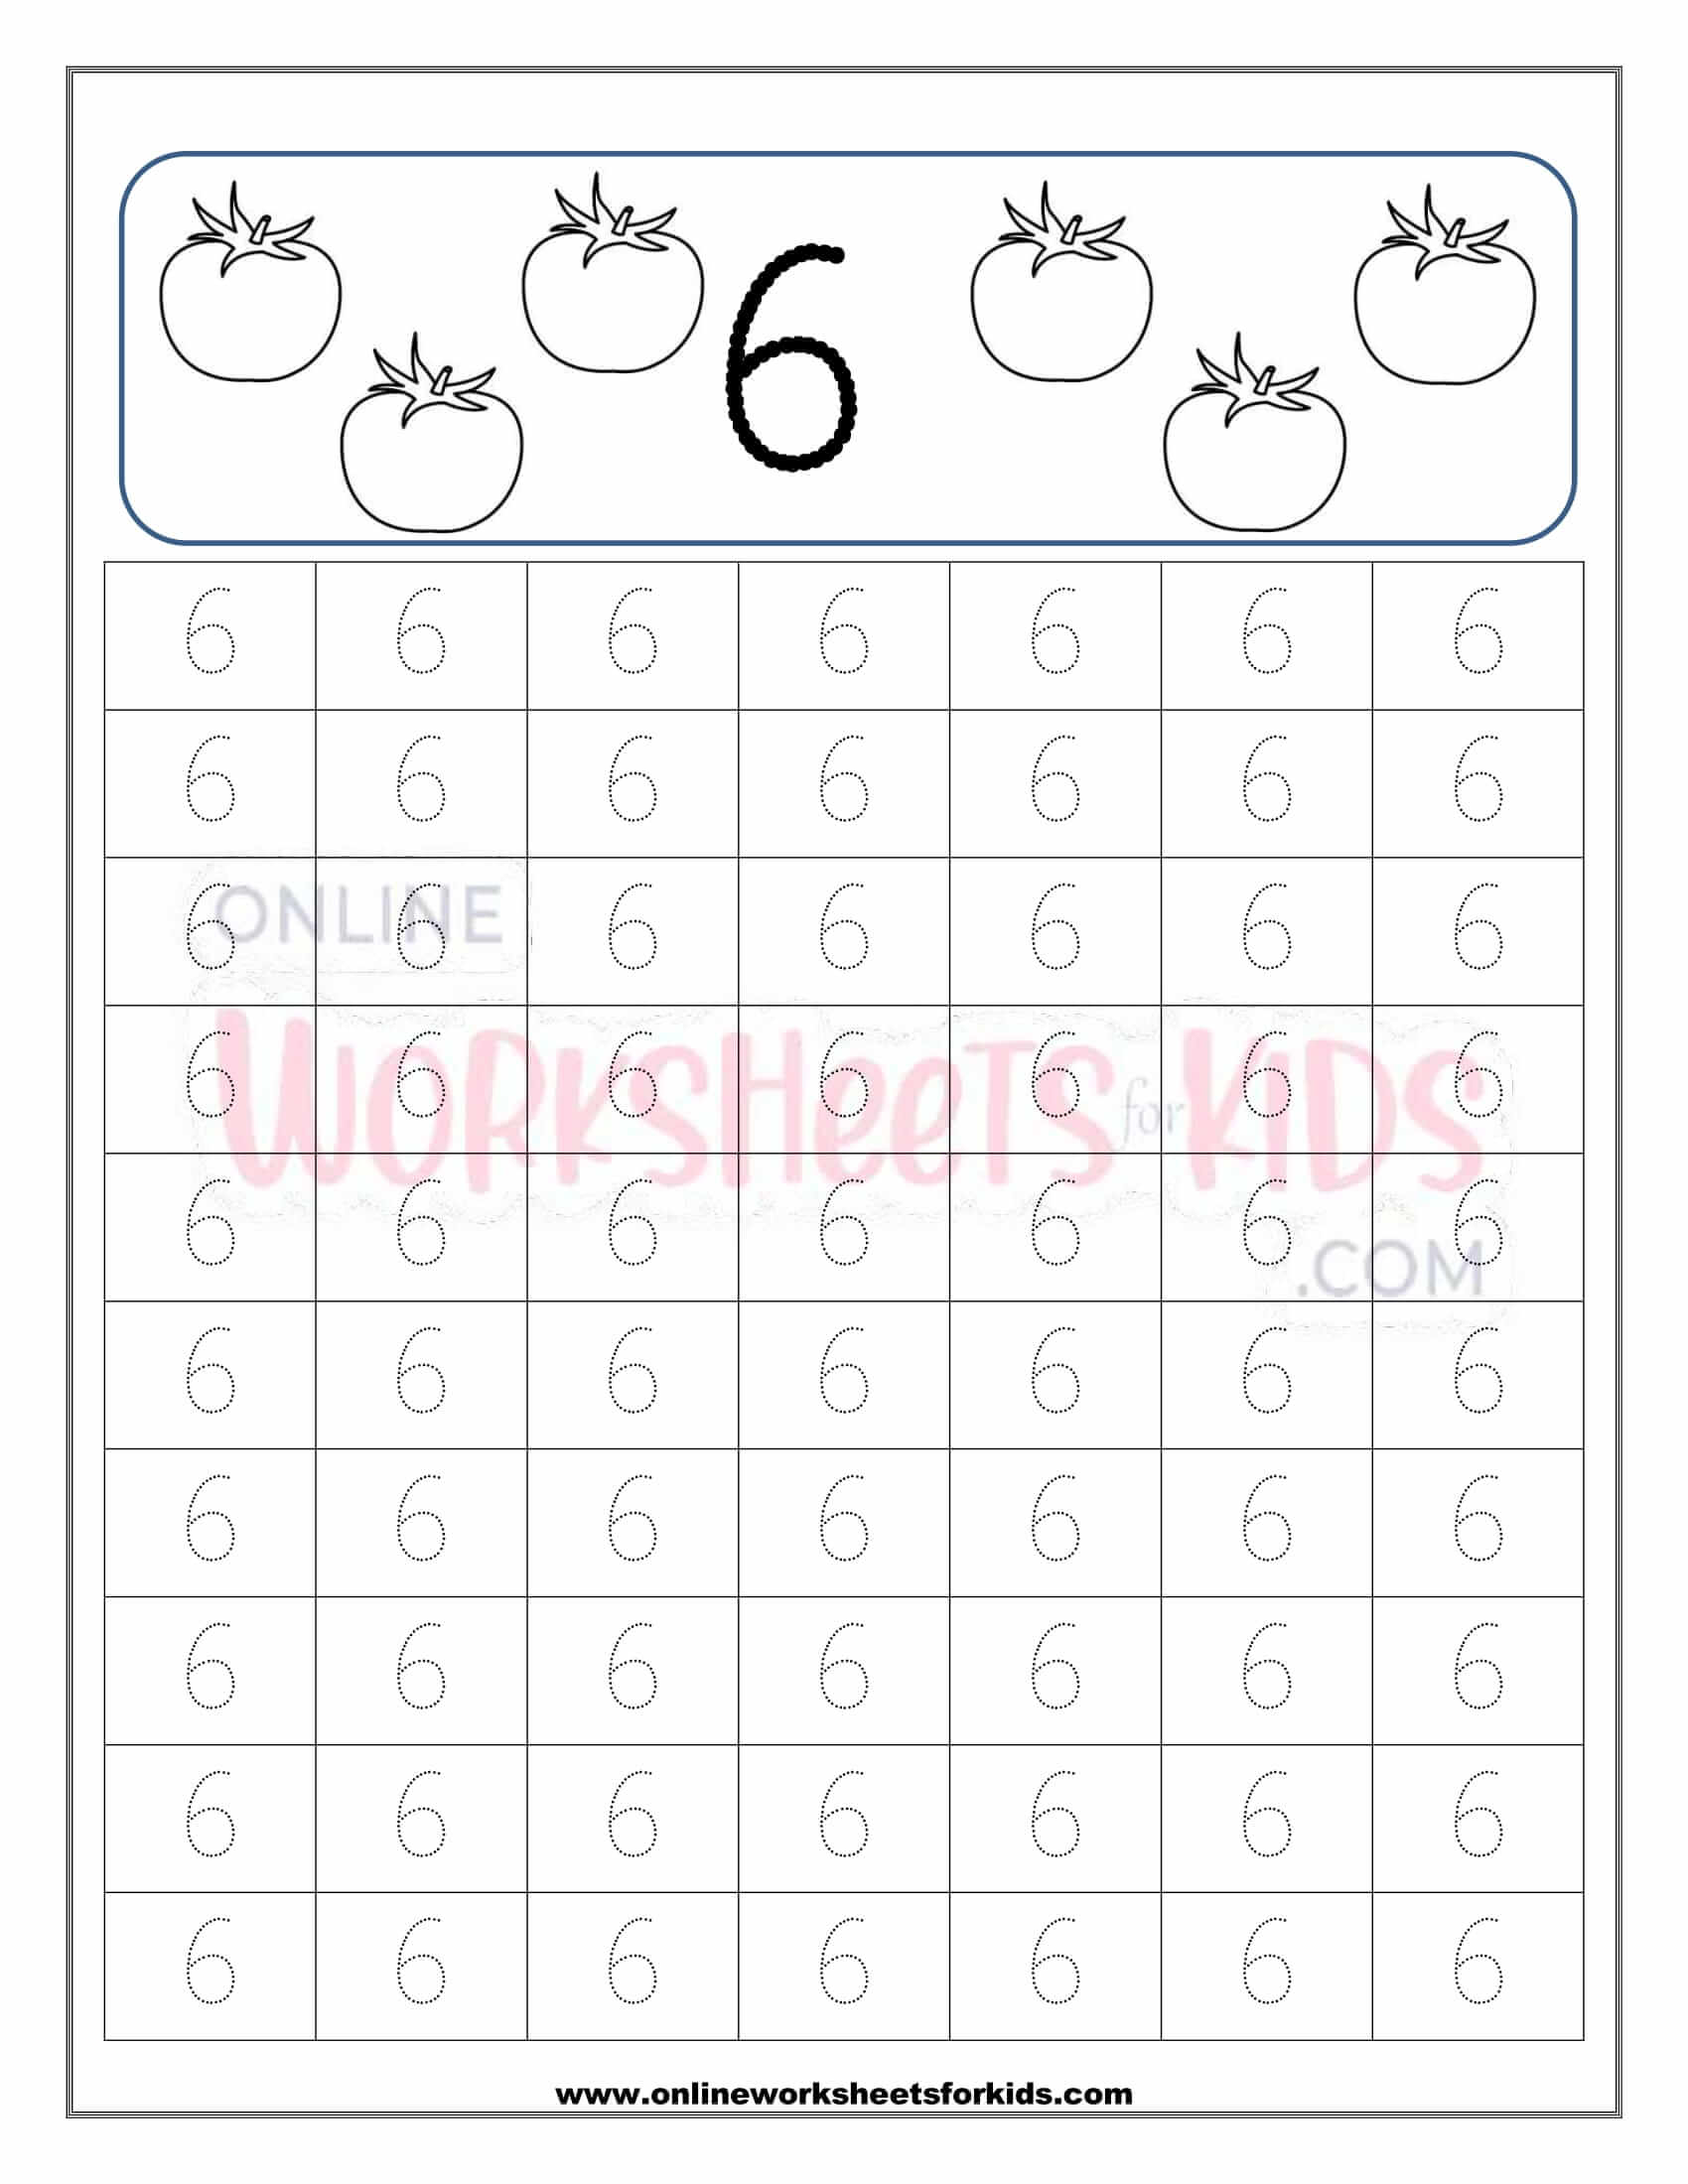 number-tracing-worksheets-for-preschool-4